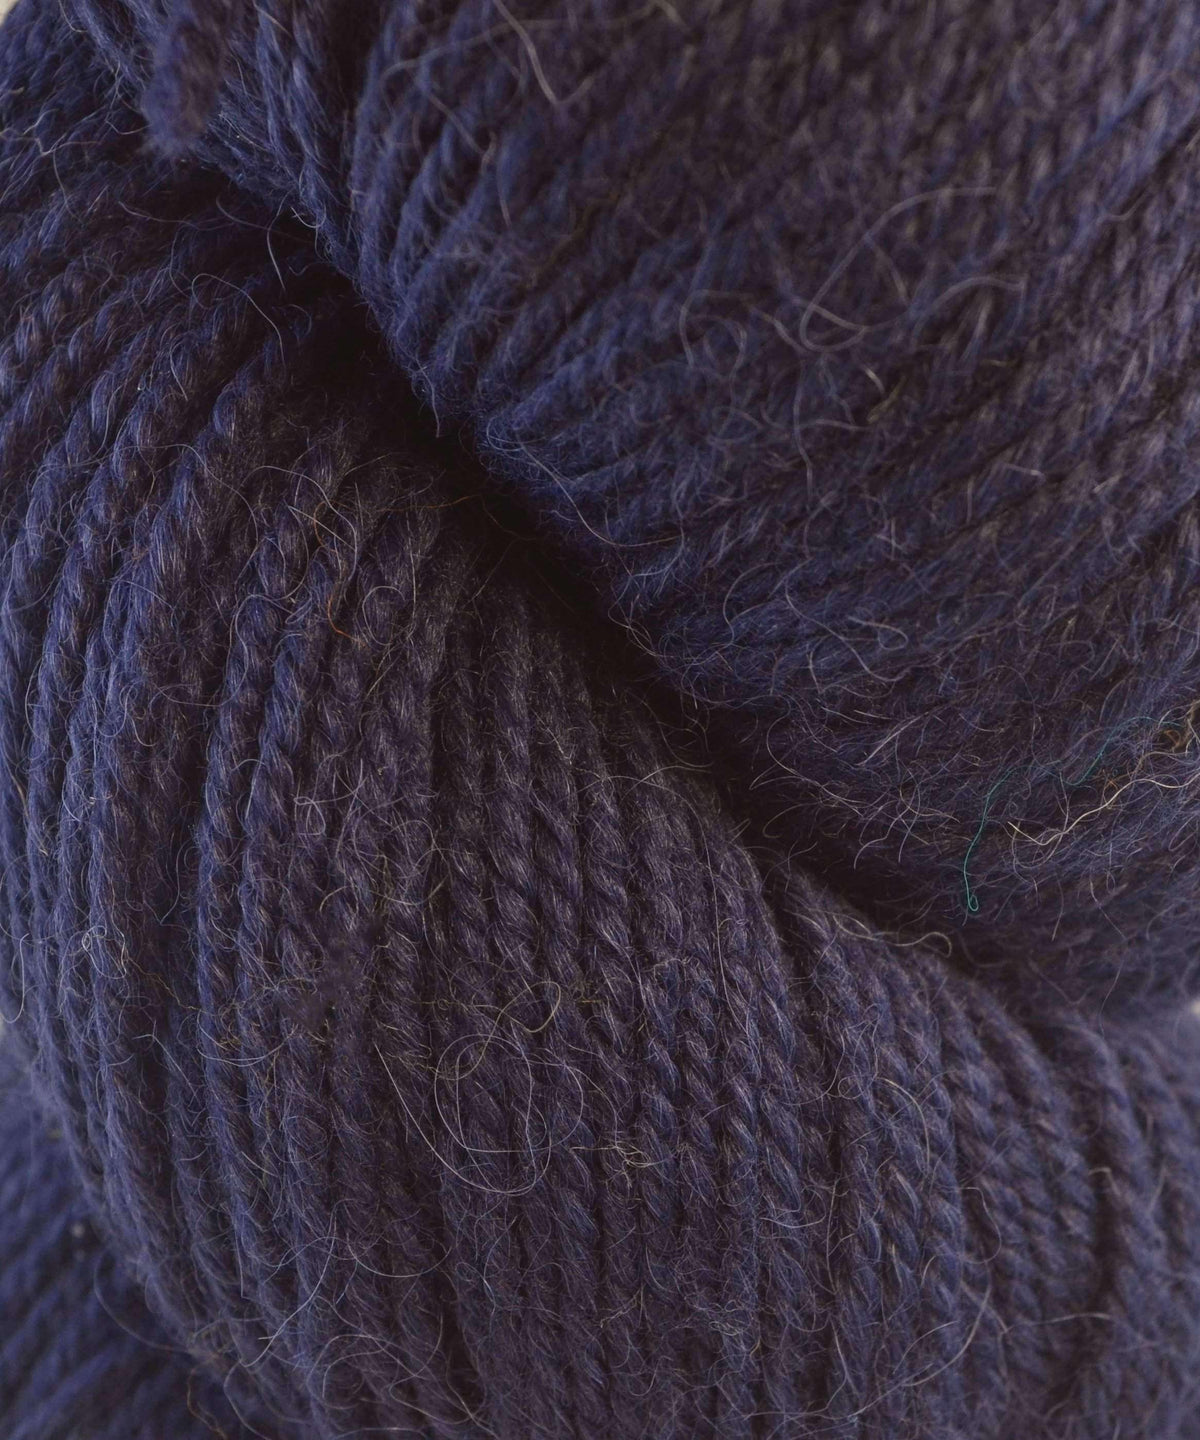 Berroco Ultra Alpaca Yarn - 6245 Pitch Black at Jimmy Beans Wool